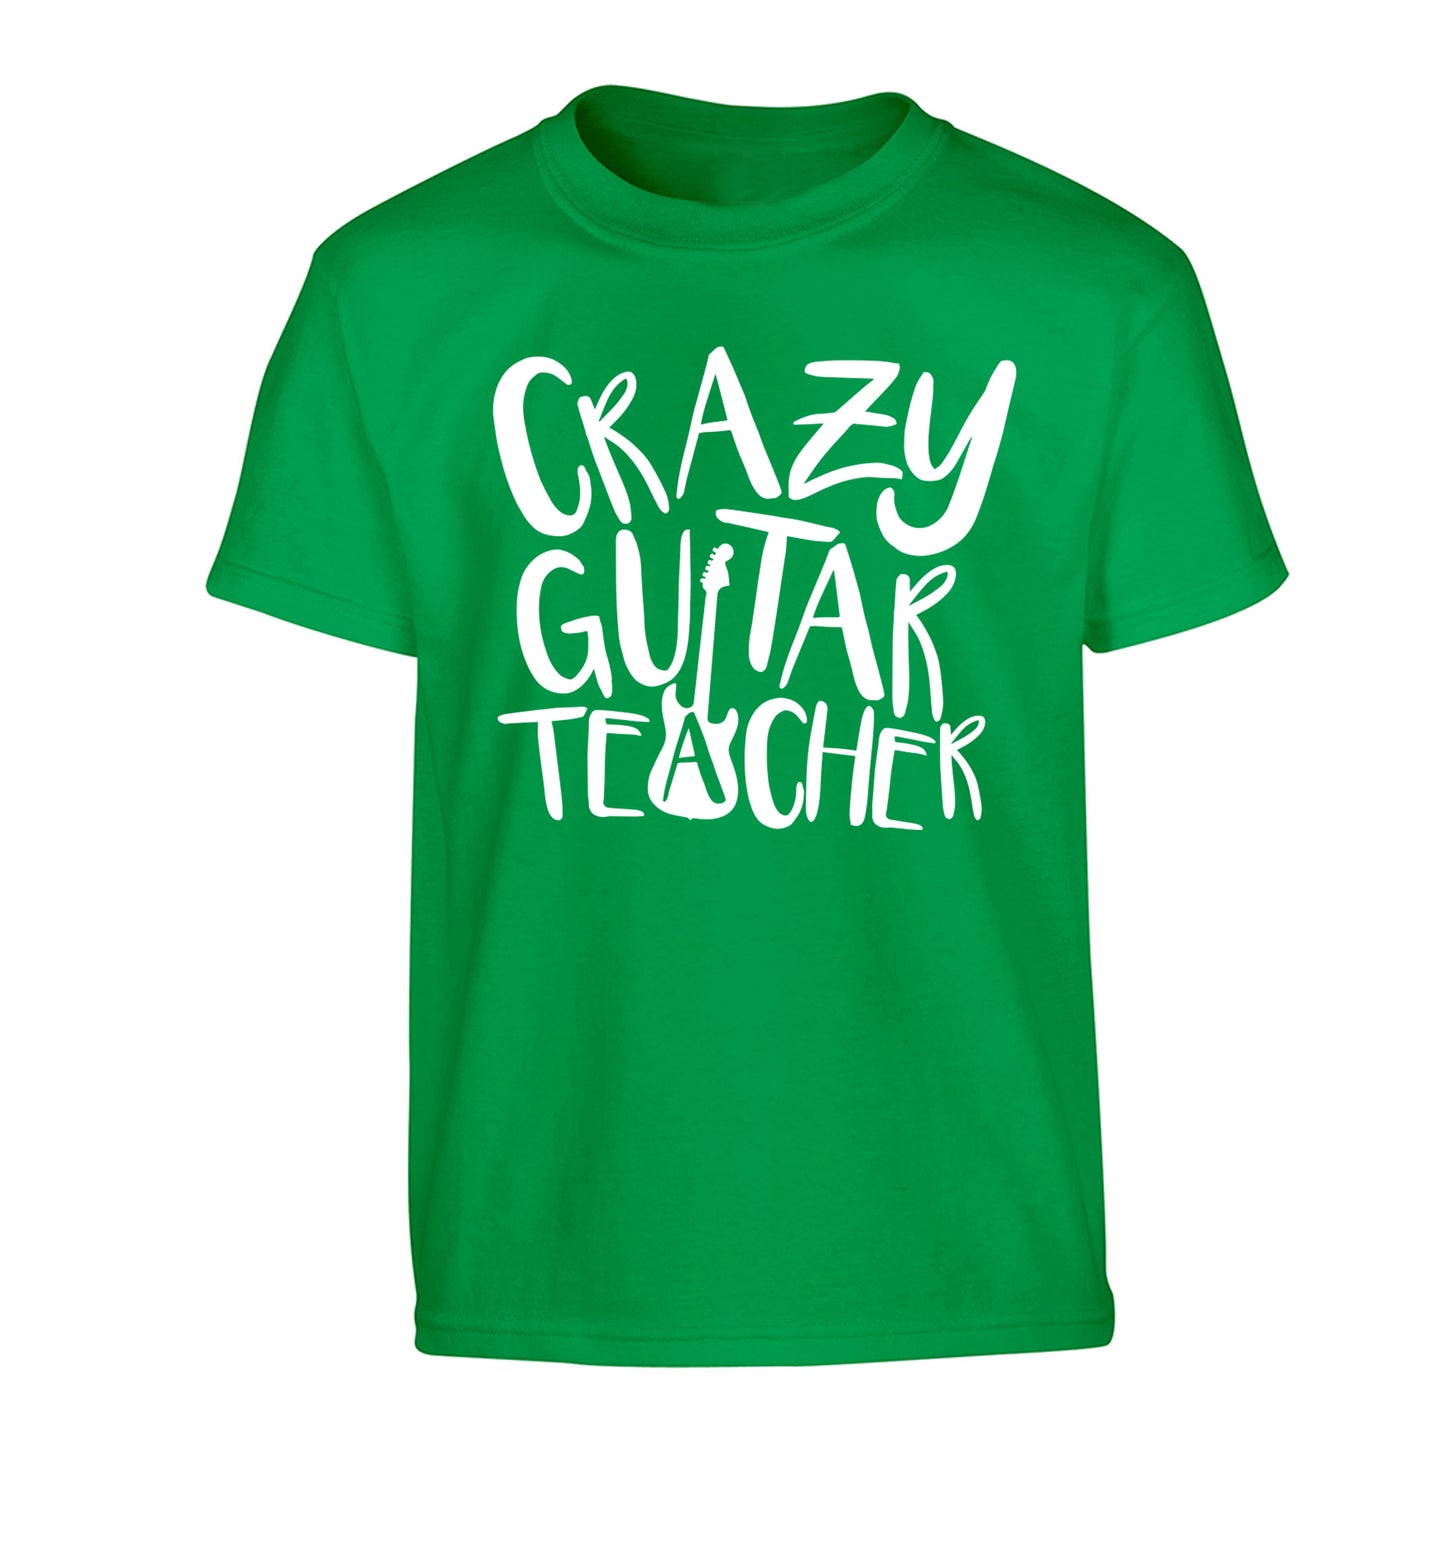 Crazy guitar teacher Children's green Tshirt 12-13 Years